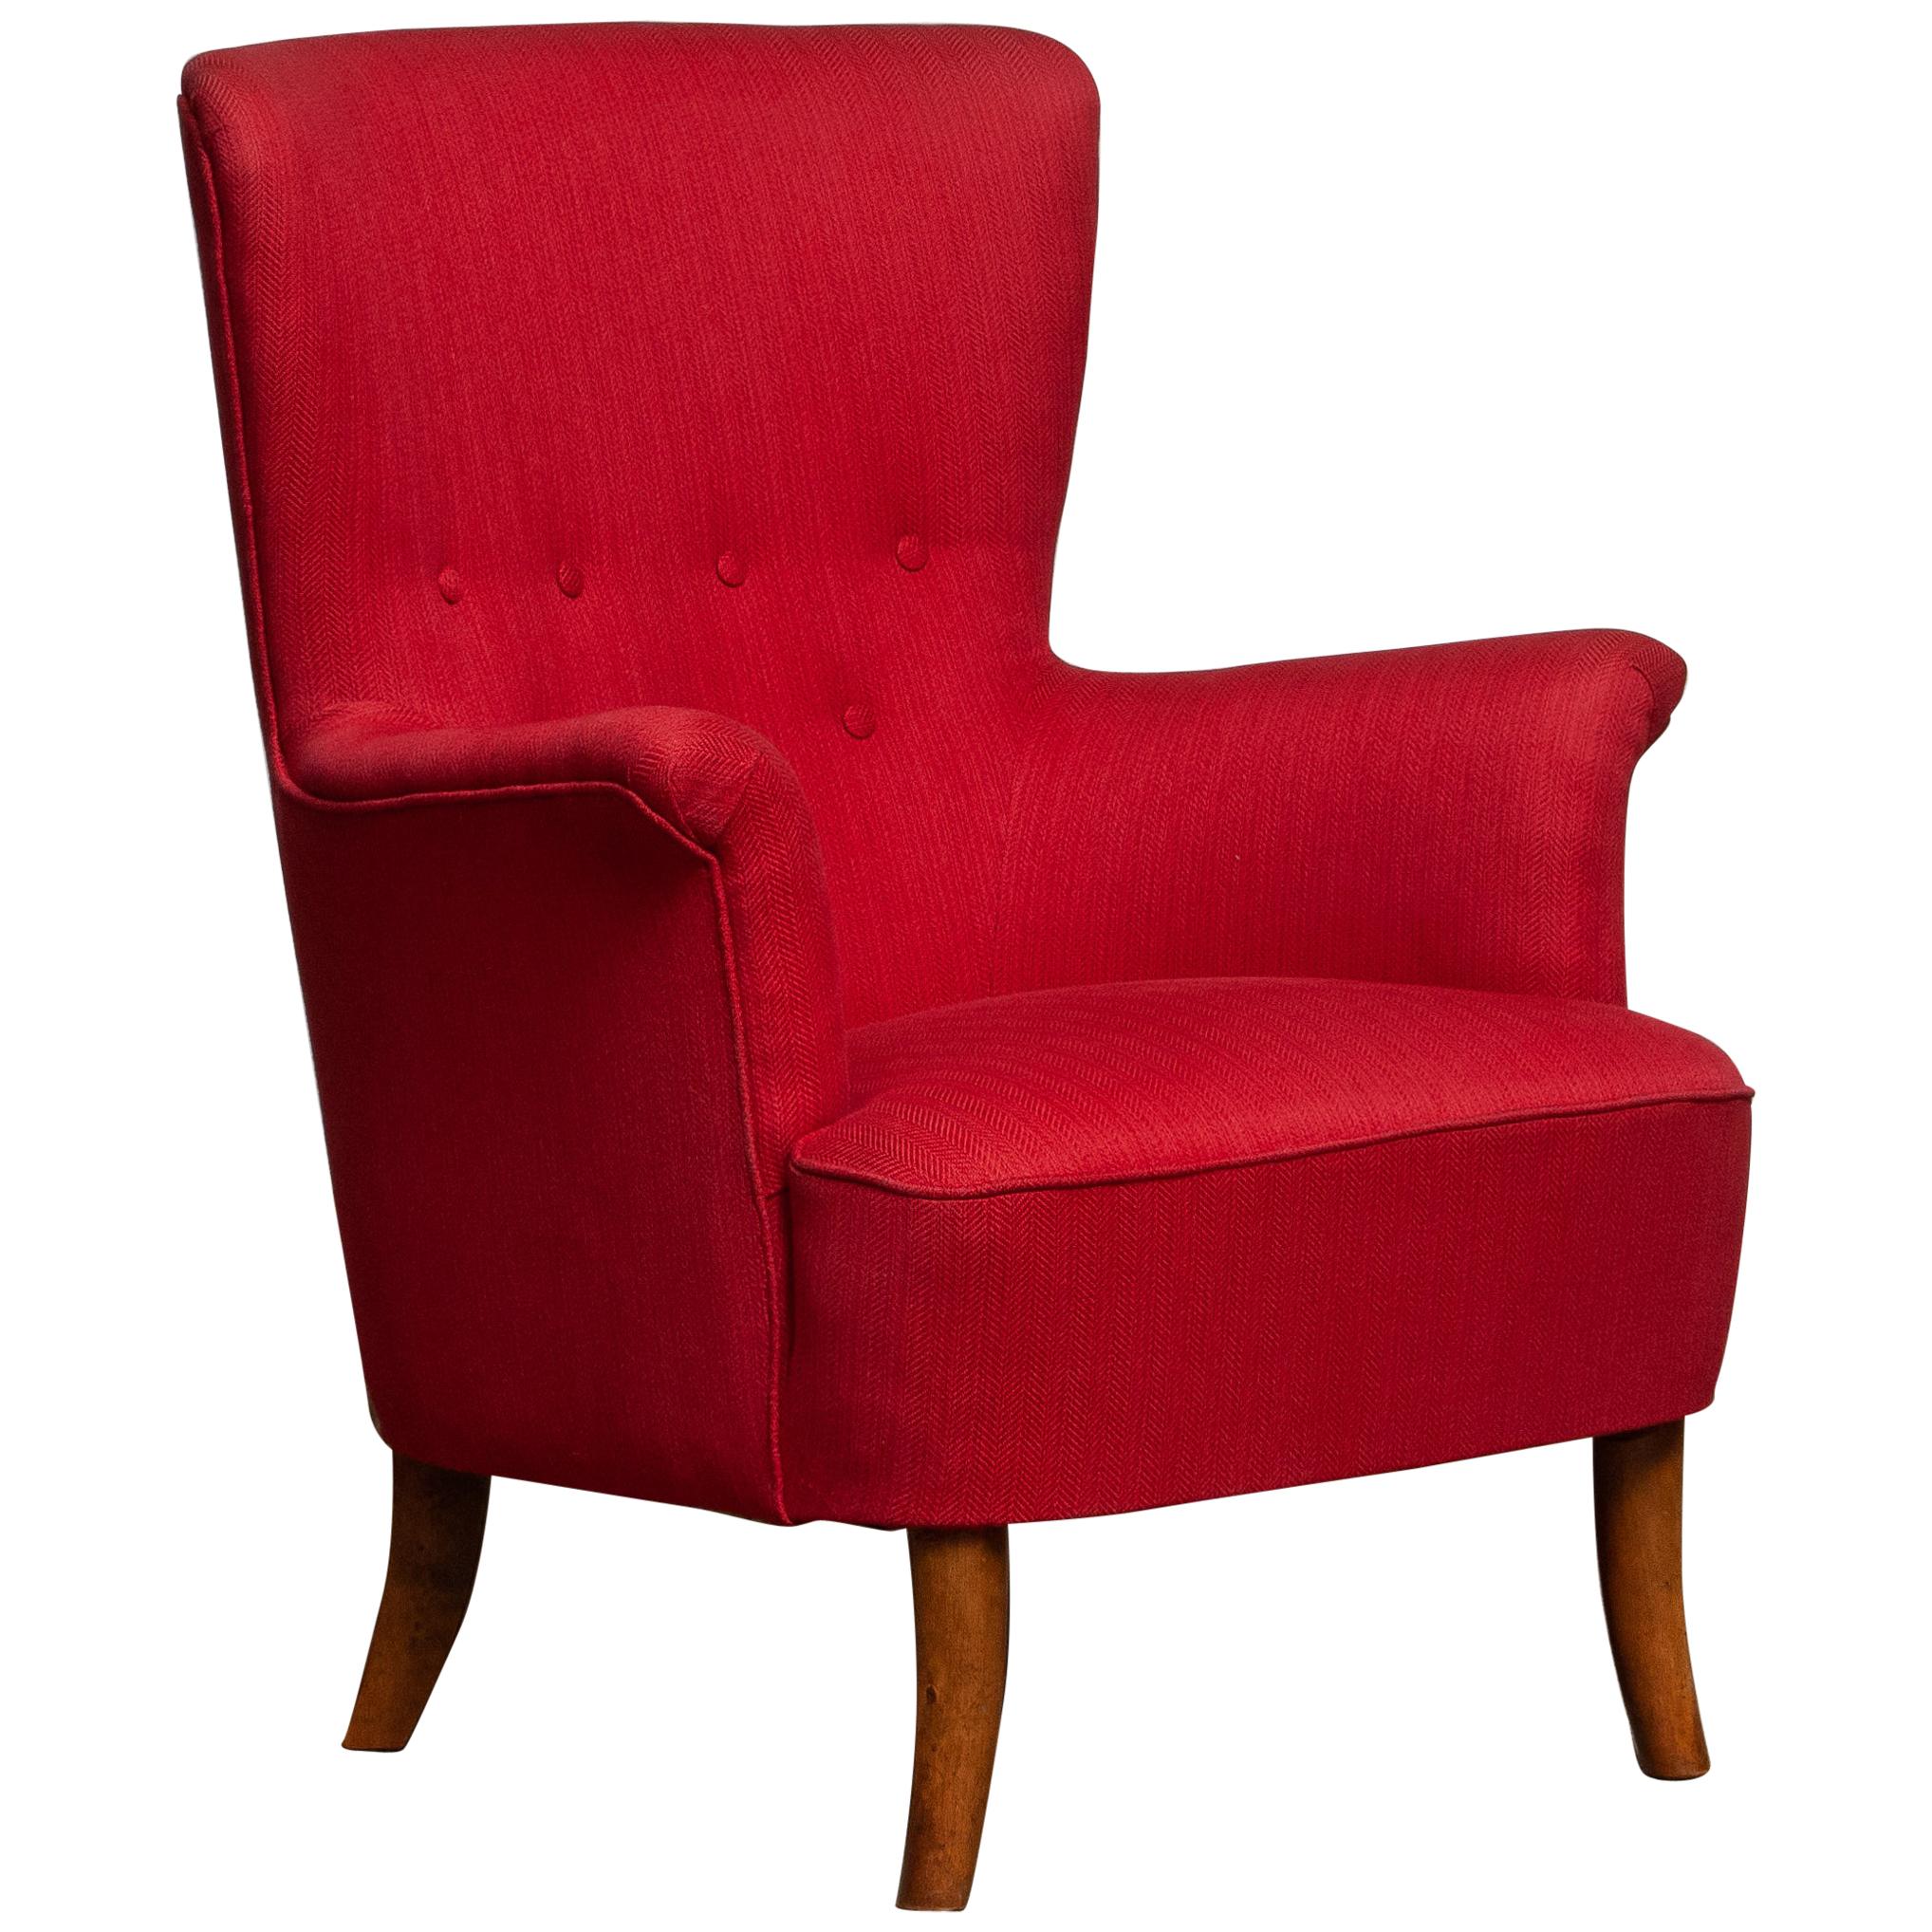 1940s, Fuchsia Easy / Lounge Lounge Chair by Carl Malmsten for Oh Sjogren Sweden